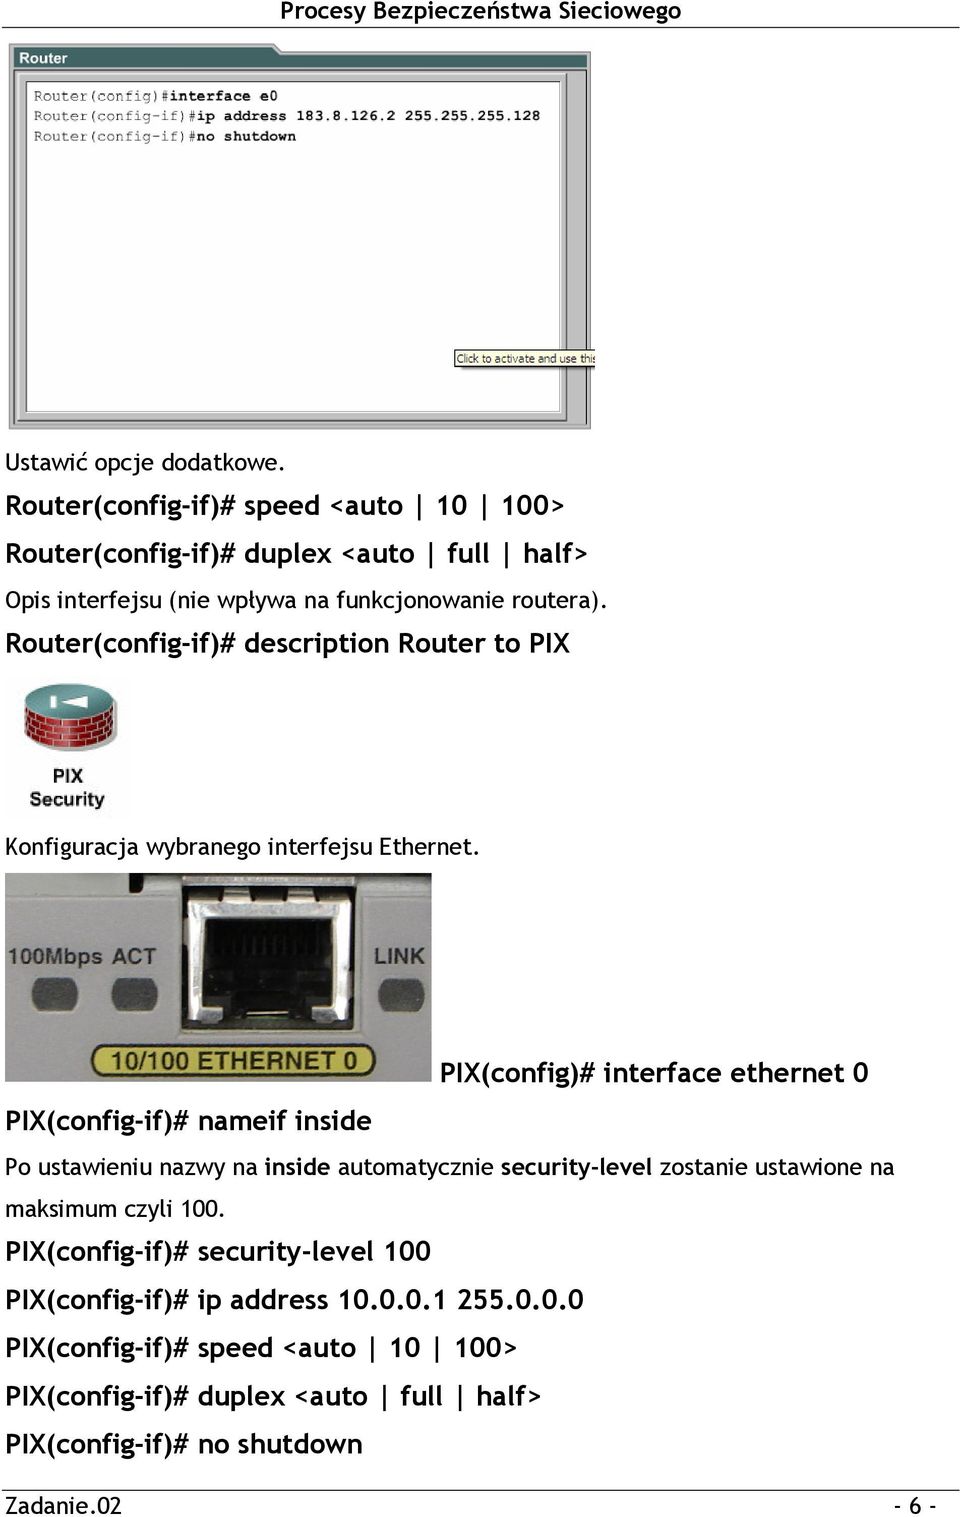 Router(config-if)# description Router to PIX Konfiguracja wybranego interfejsu Ethernet.